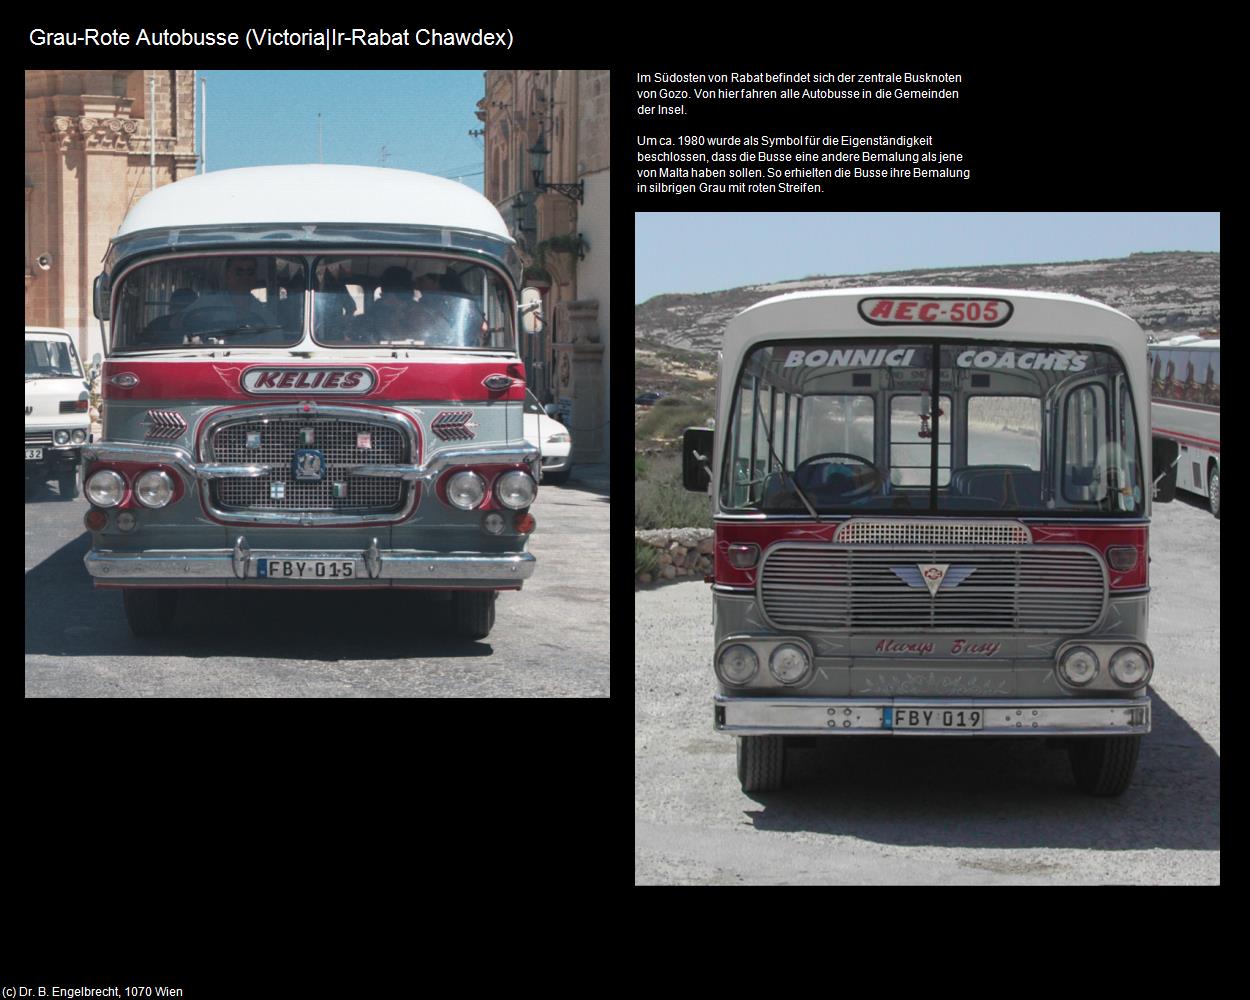 Grau-Rote Autobusse (Victoria|Ir-Rabat Chawdex auf Gozo) in Malta - Perle im Mittelmeer